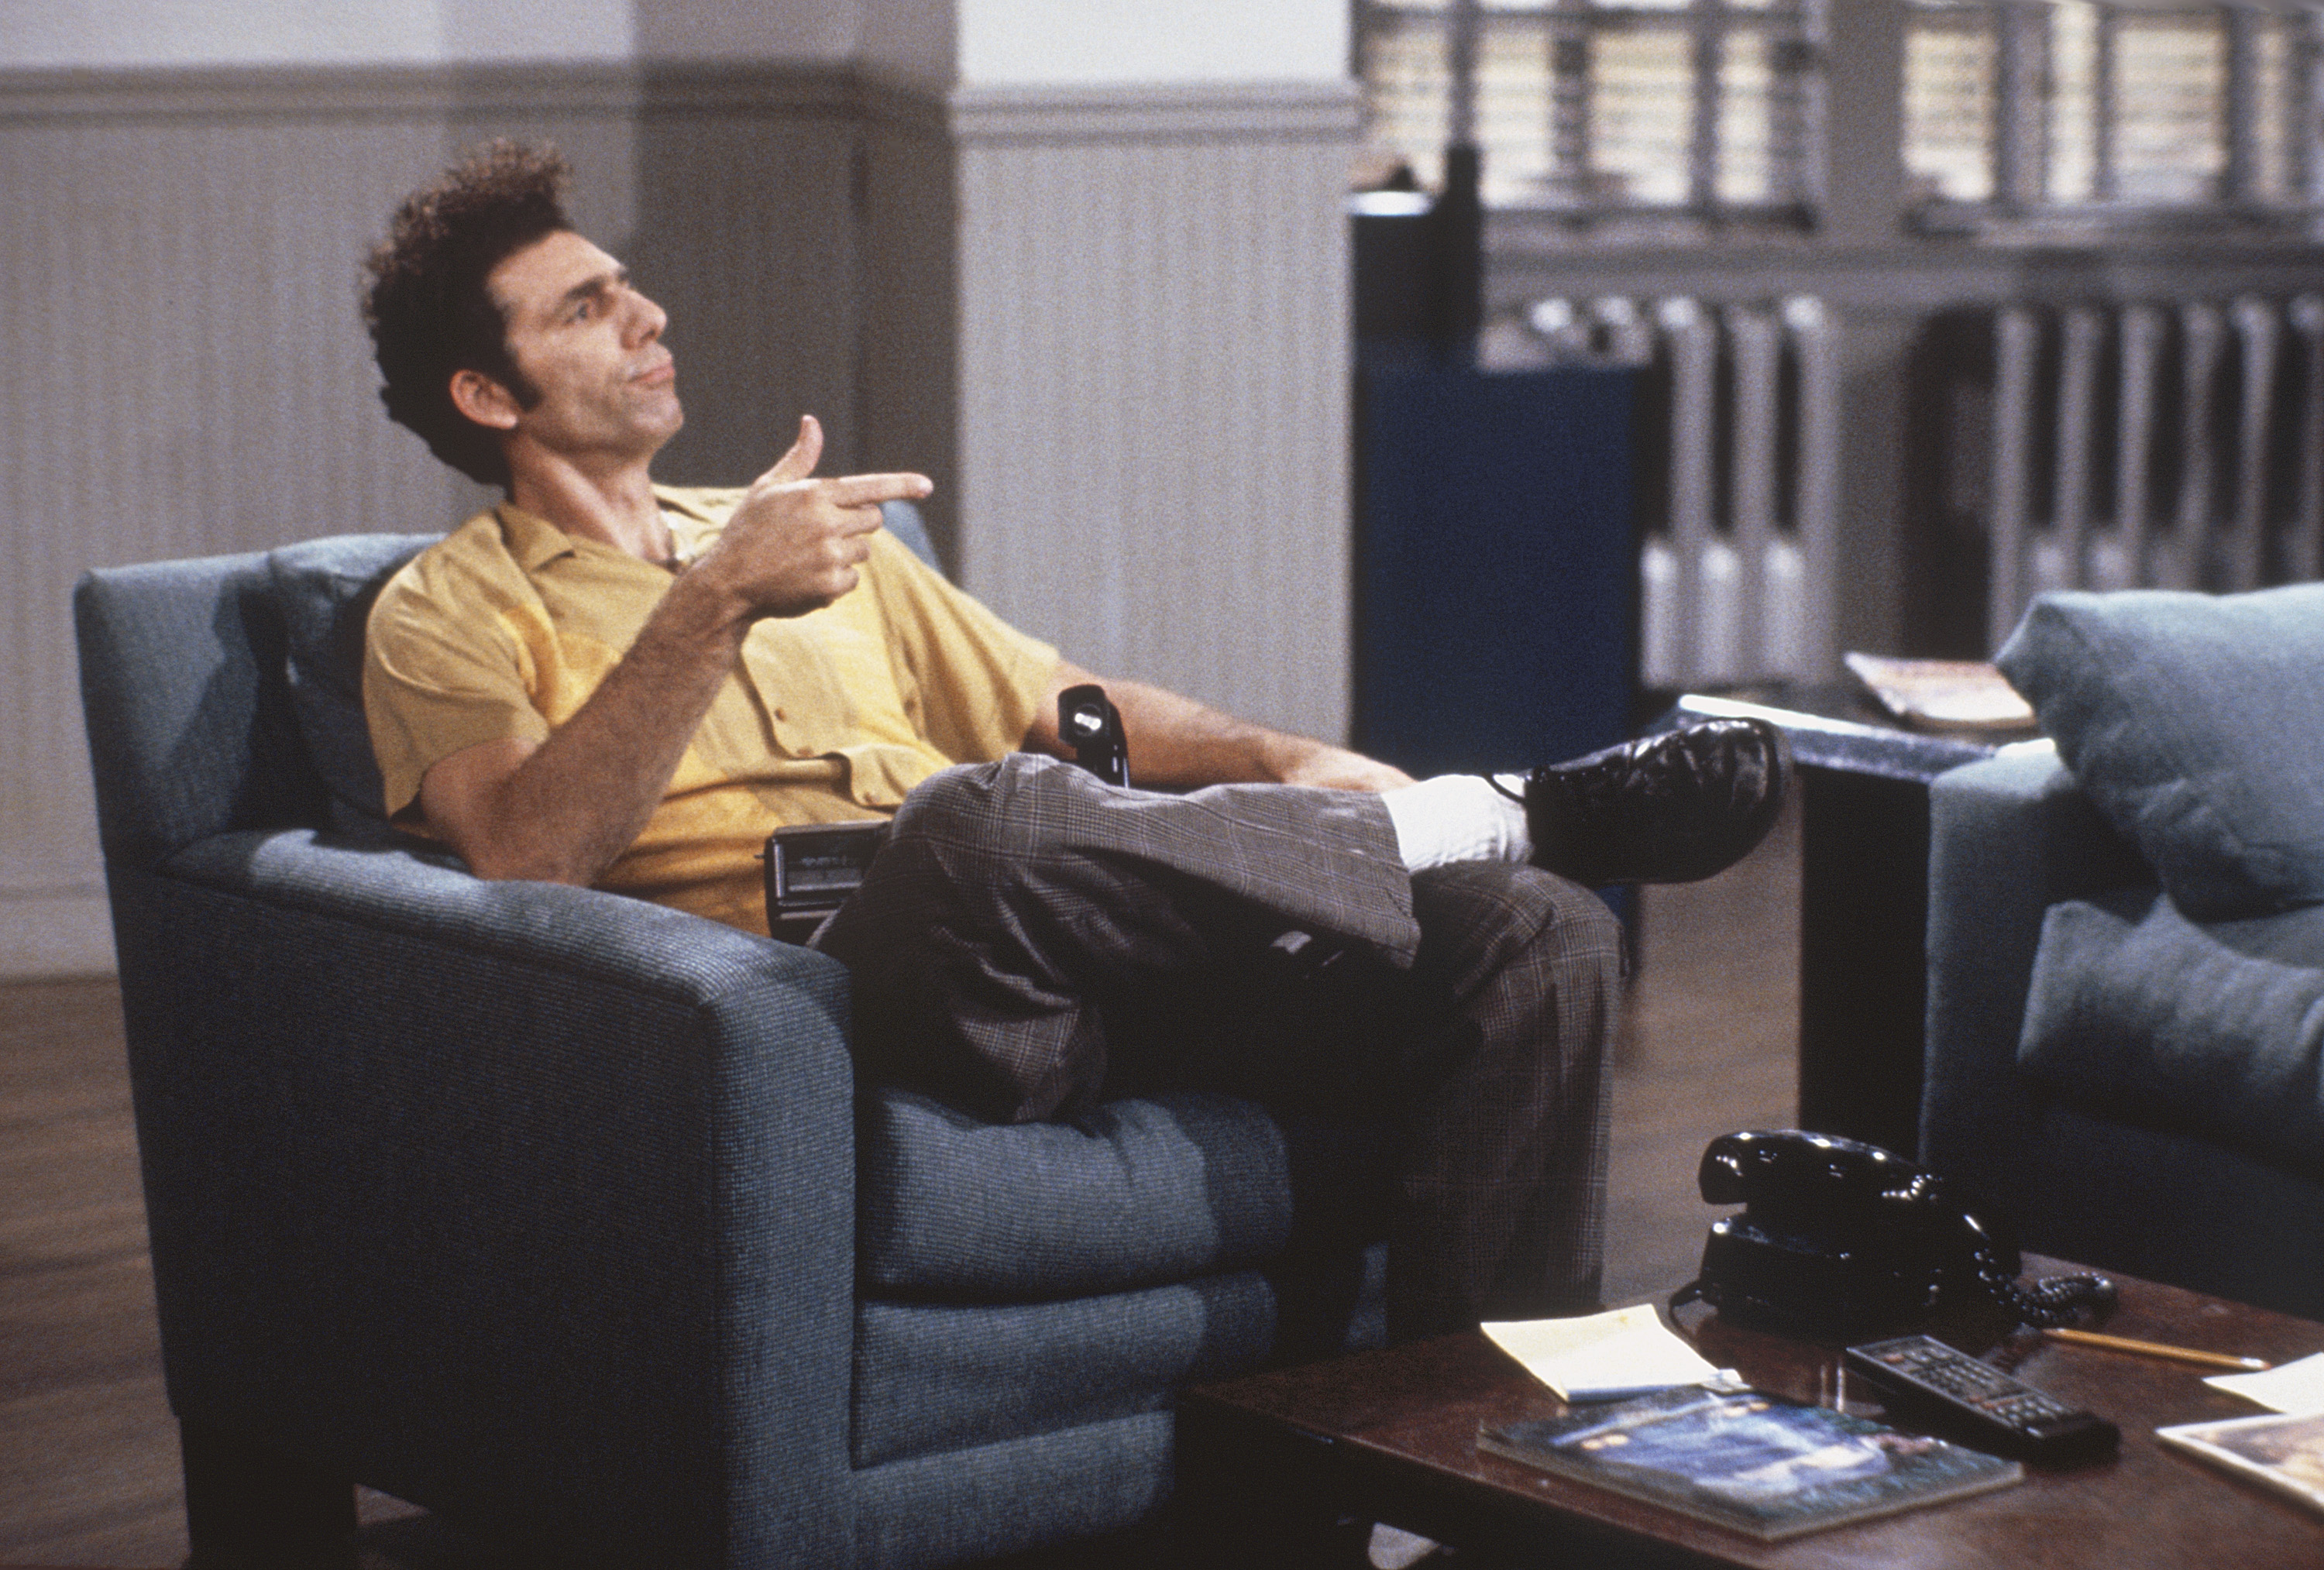 Michael Richards as Kramer